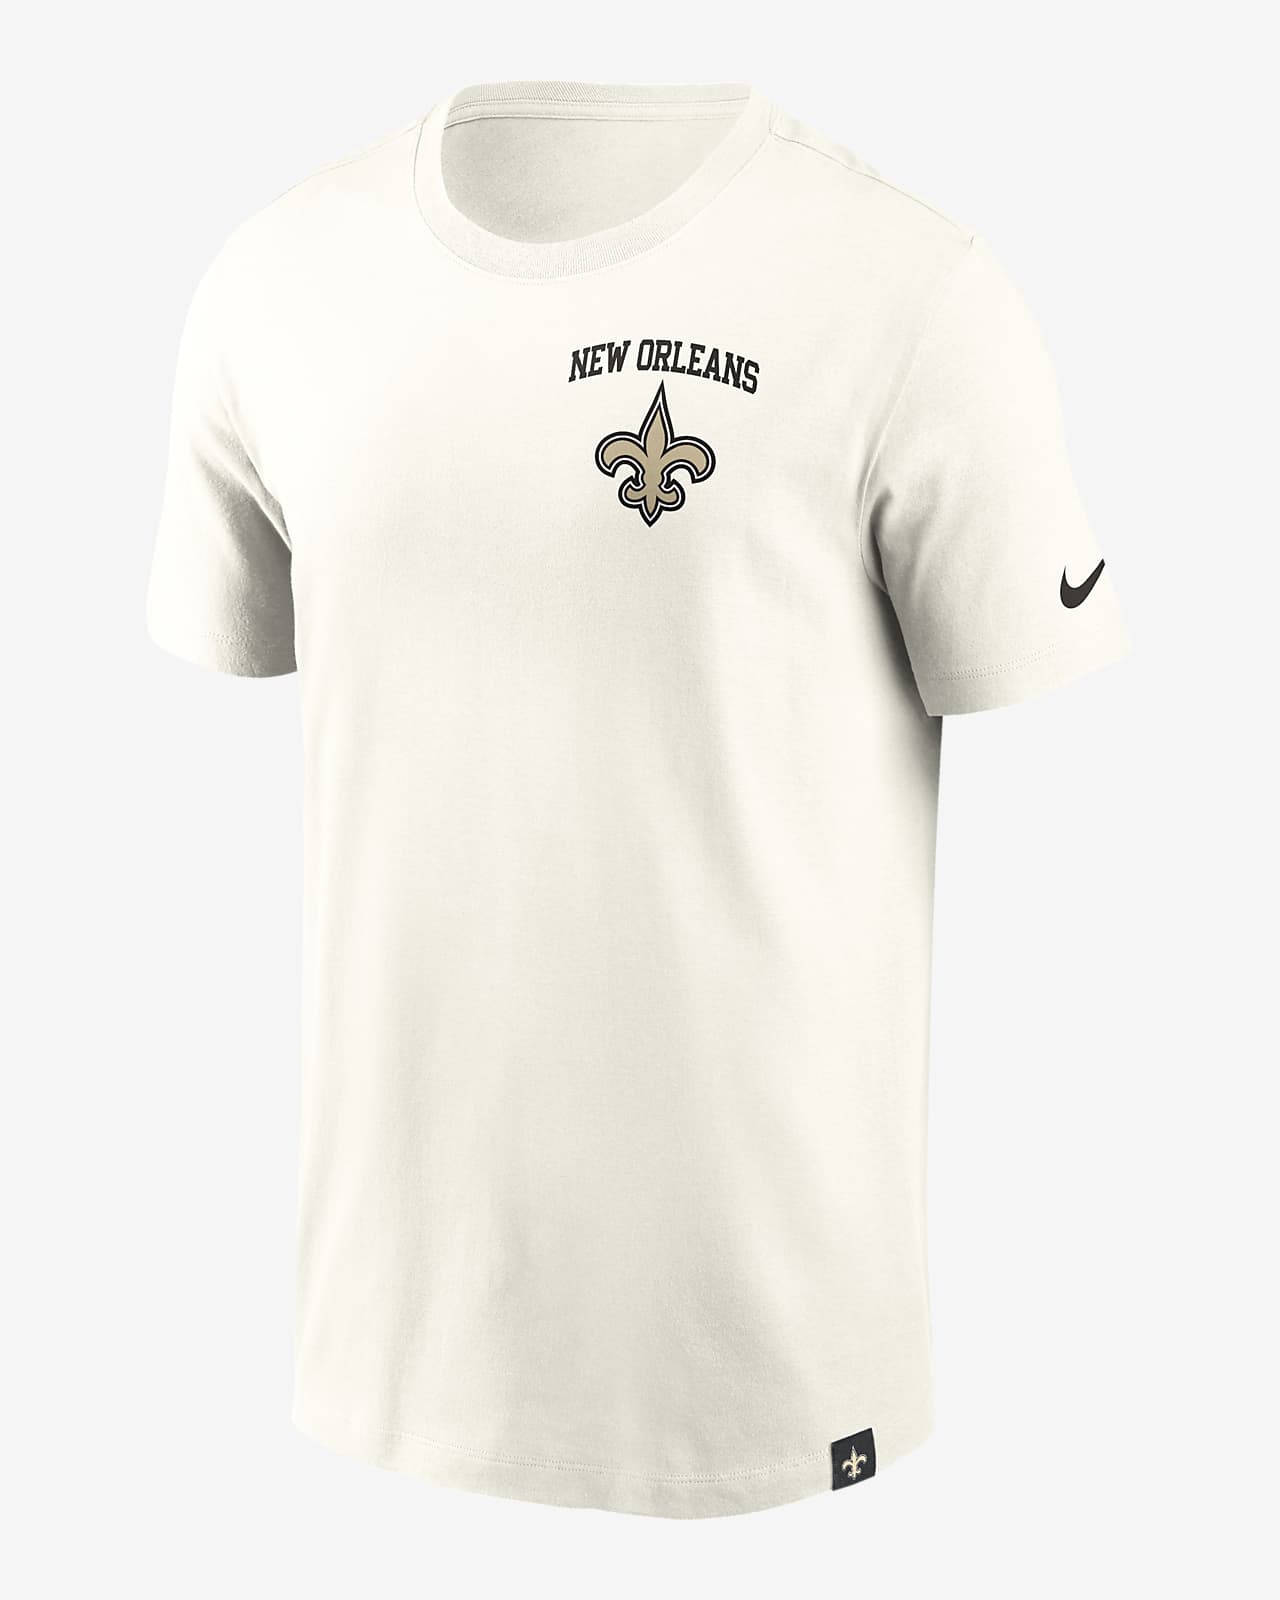 Playera Nike de la NFL para hombre New Orleans Saints Blitz Essential